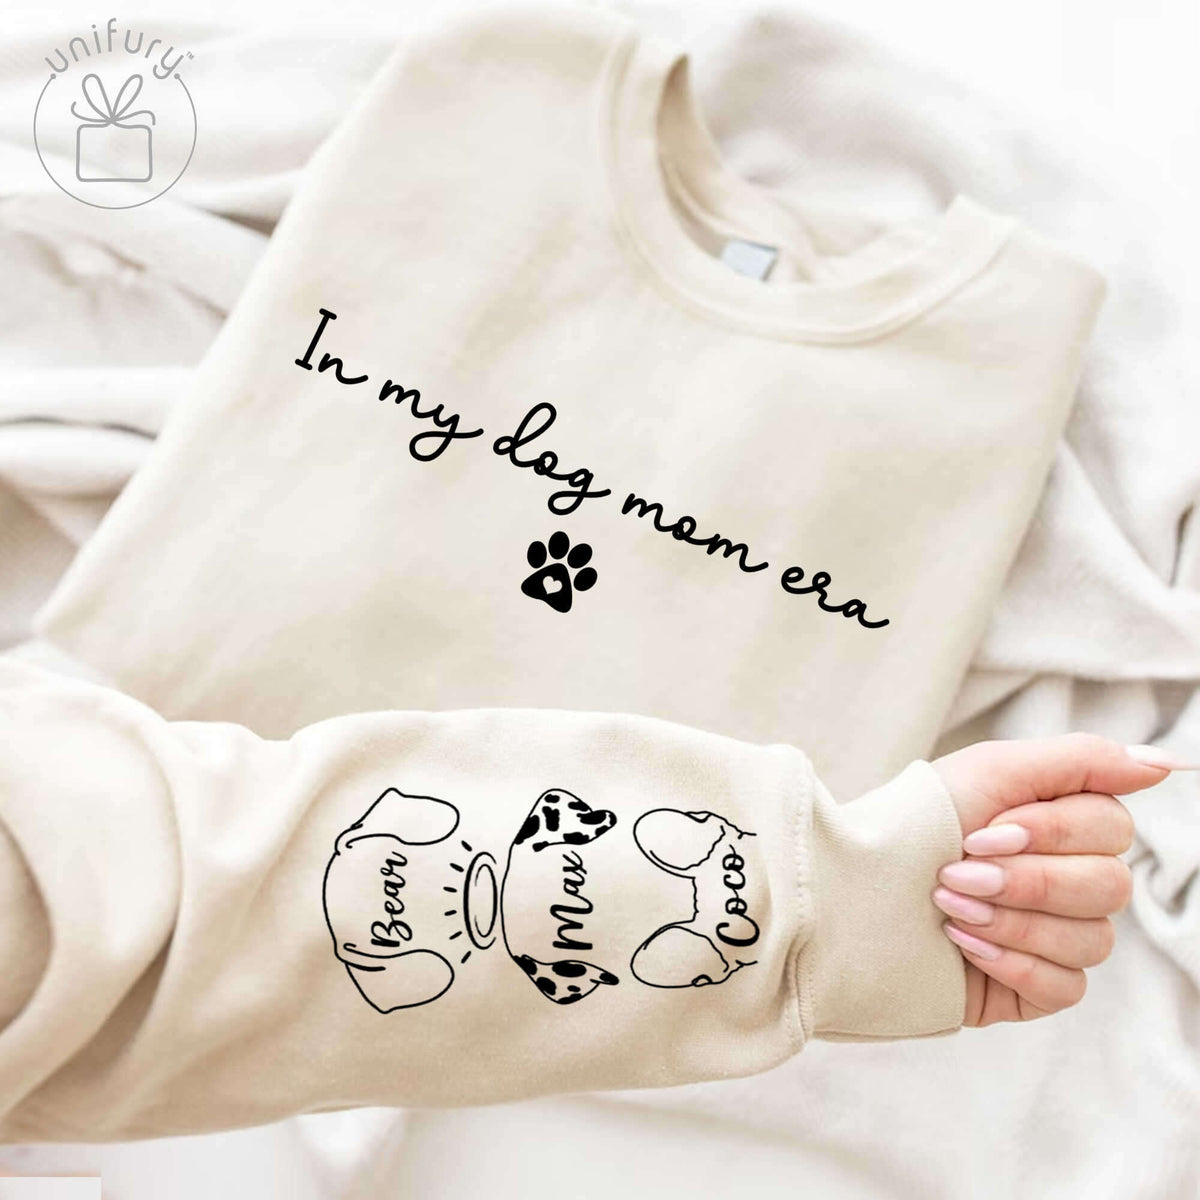 In My Dog Mom Era Sleeve Printed Standard Sweatshirt For Dog Lovers